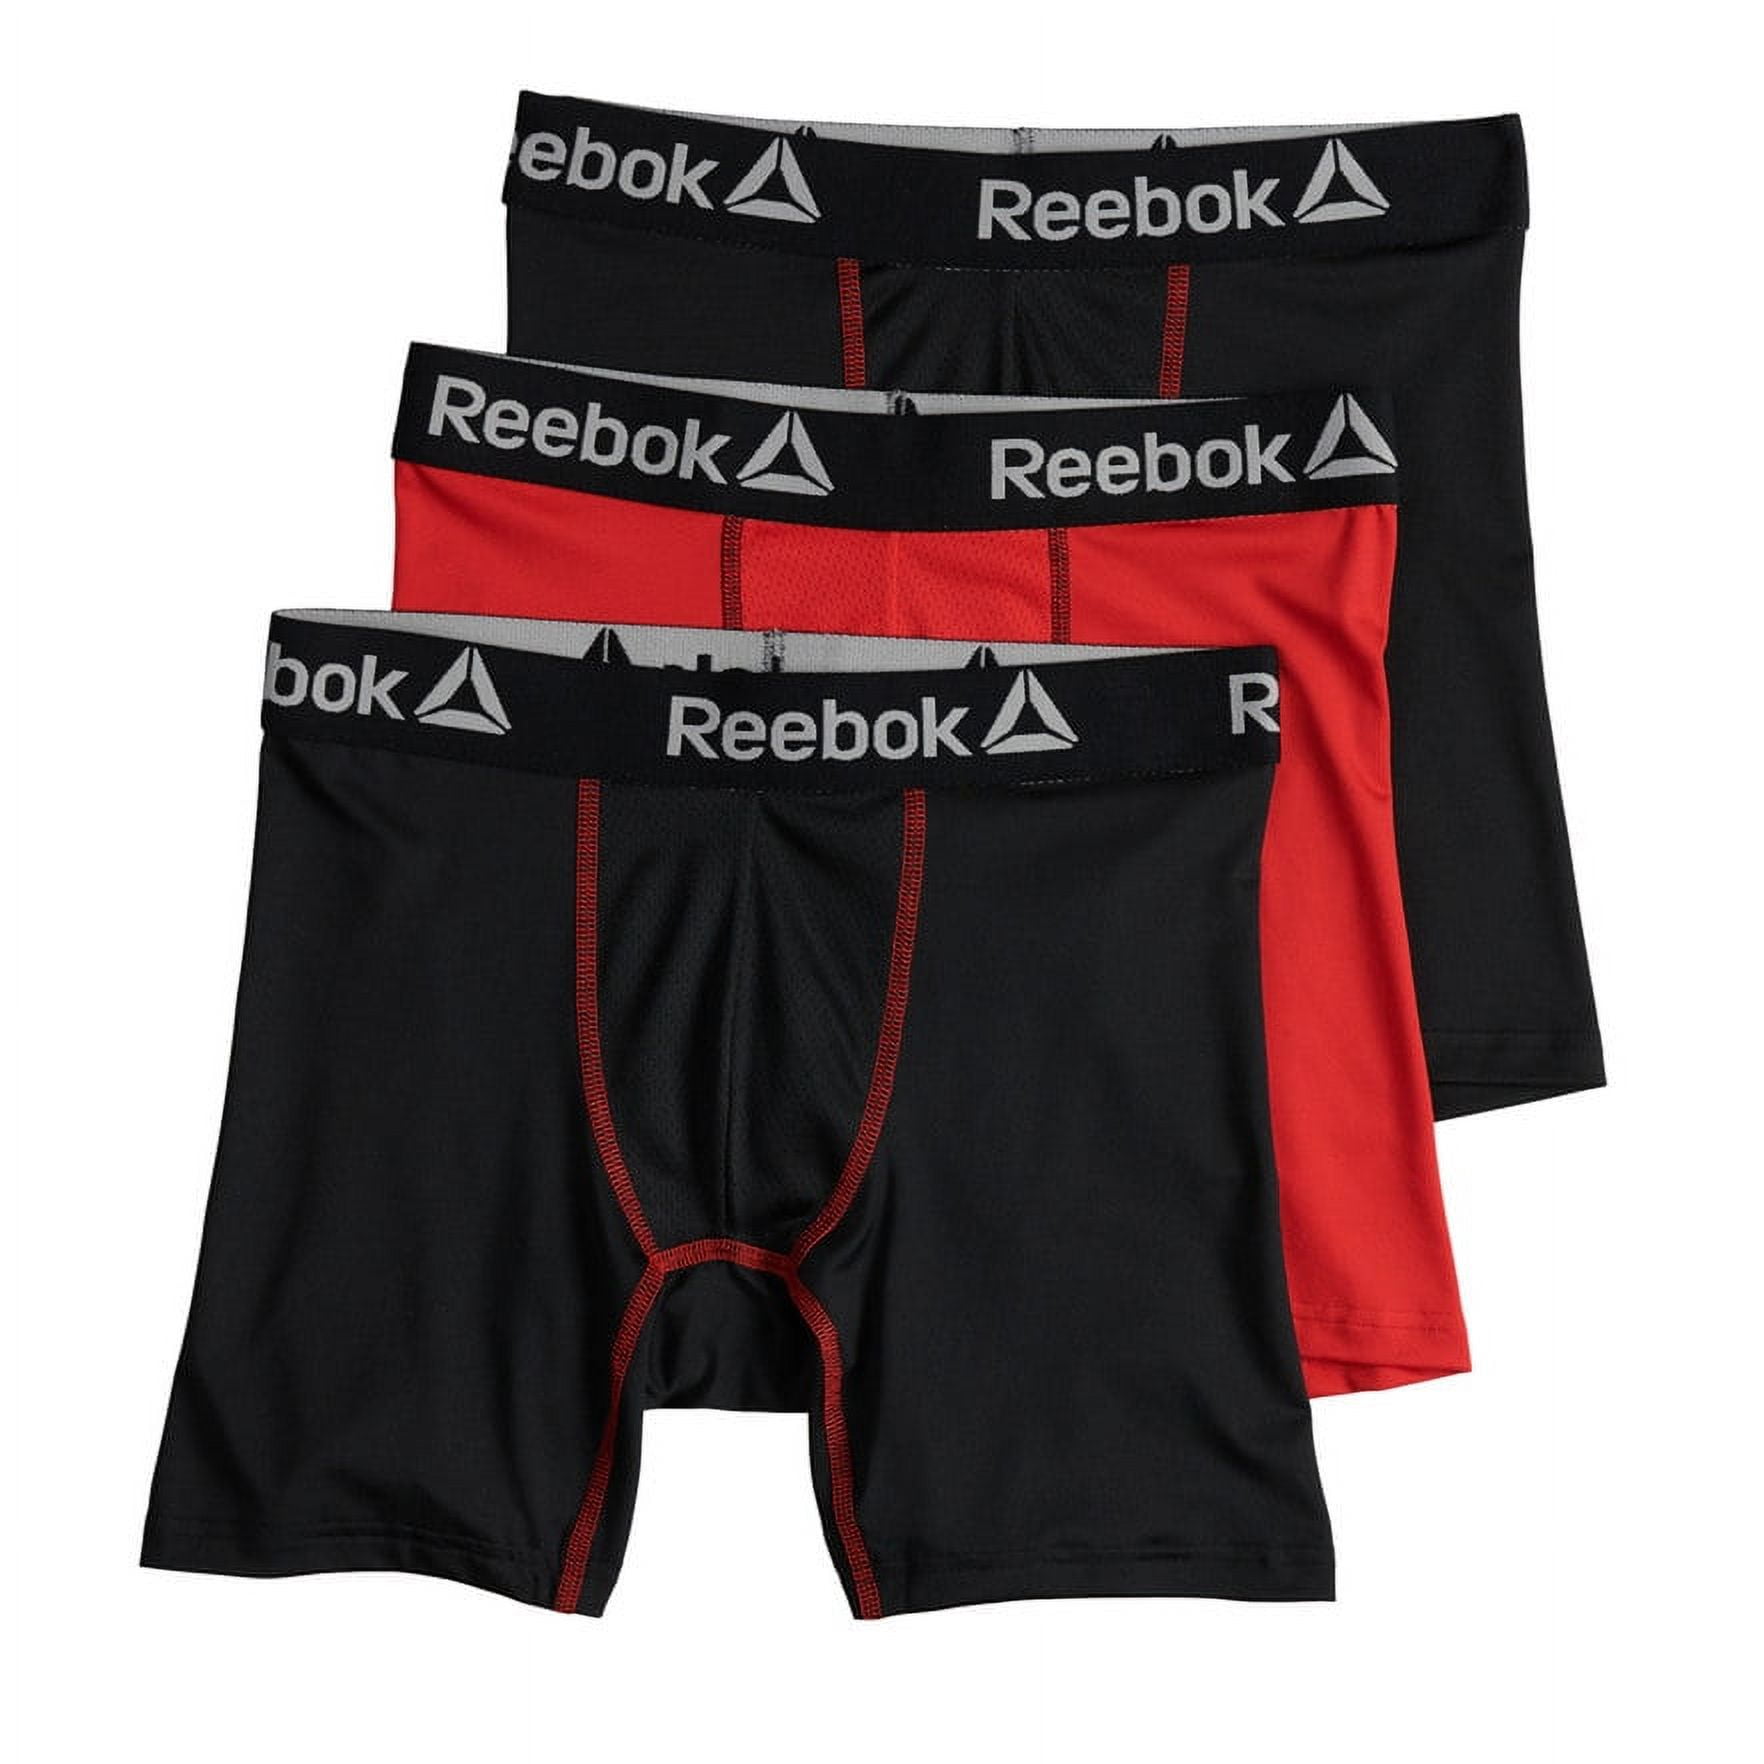 Reebok Men's Performance Boxer Briefs, 3 Pack 